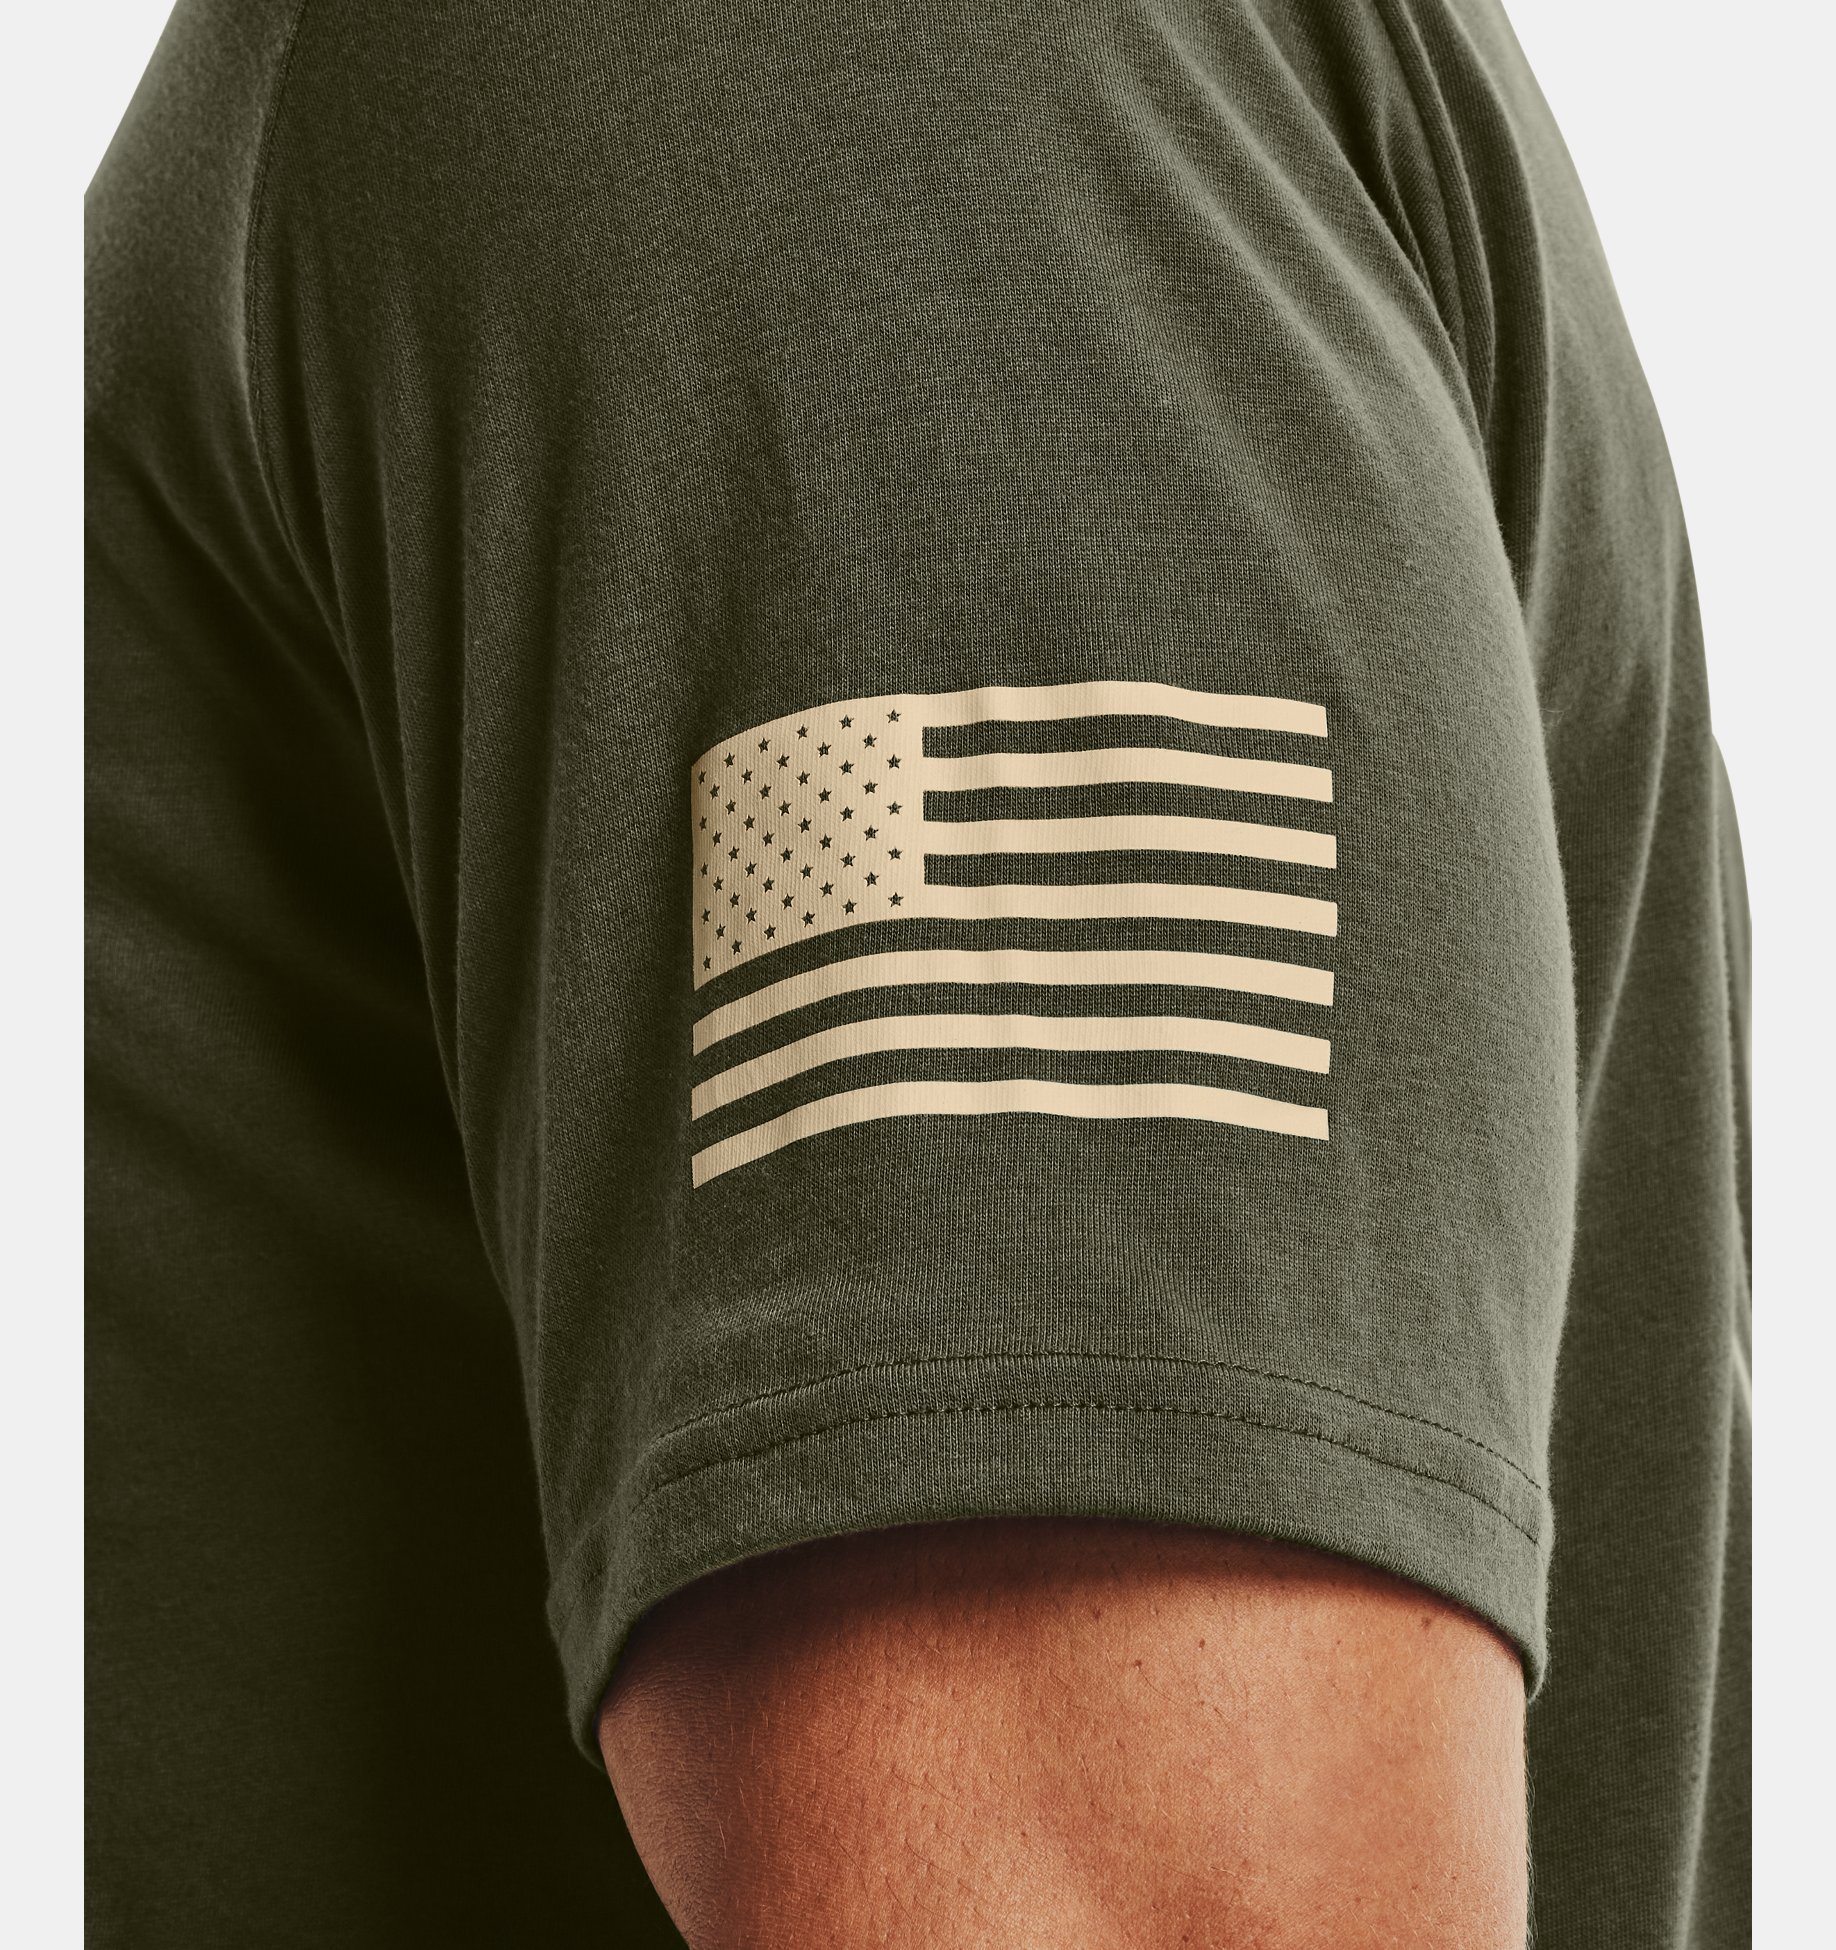 Under Armour New Freedom Flag T-Shirt Camisa para Hombre